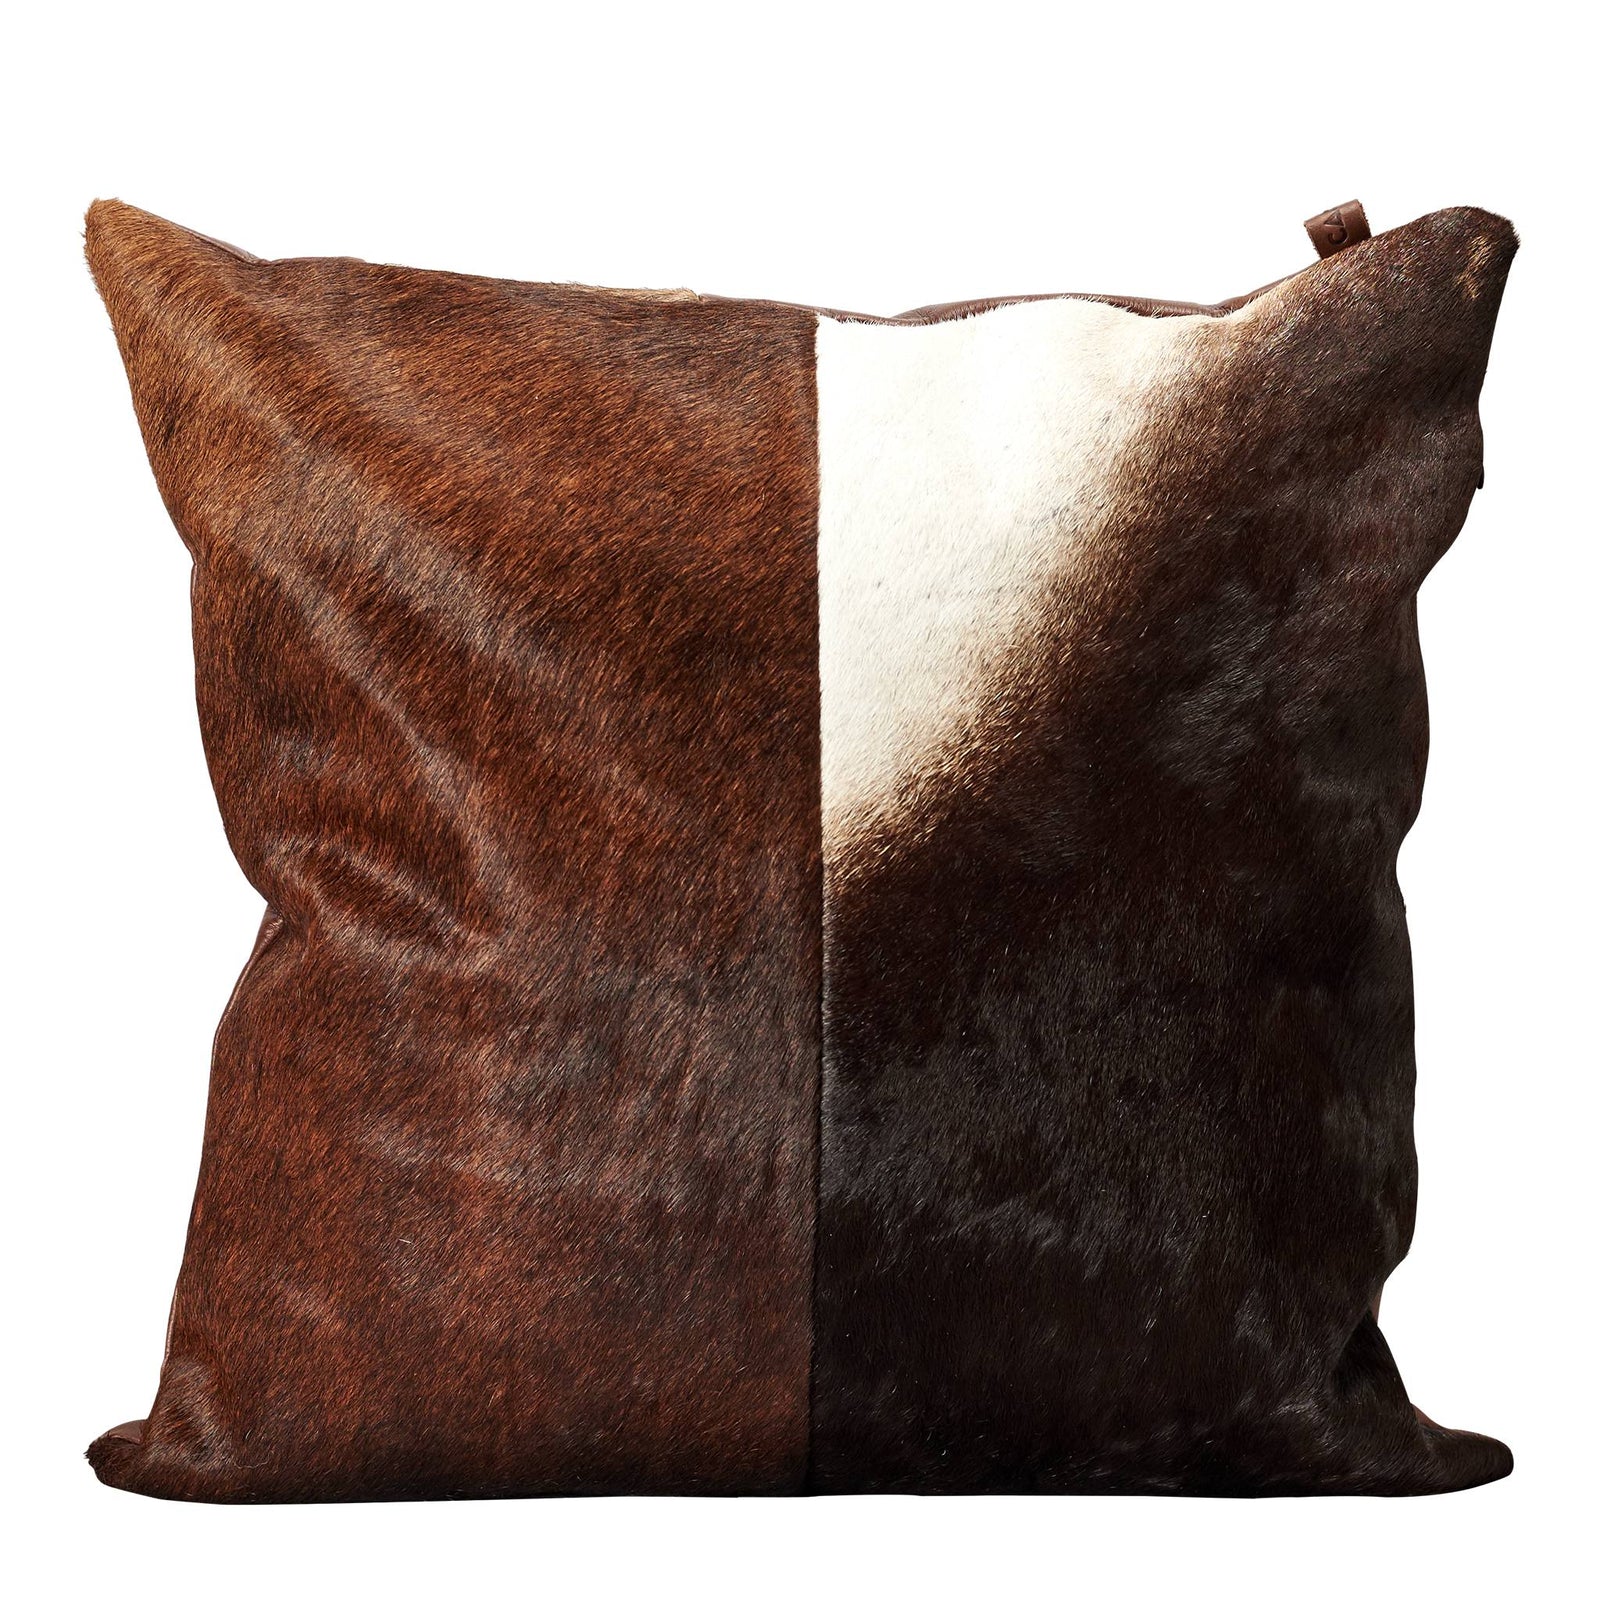 Dual Leather Cowhide Pillow Cushion